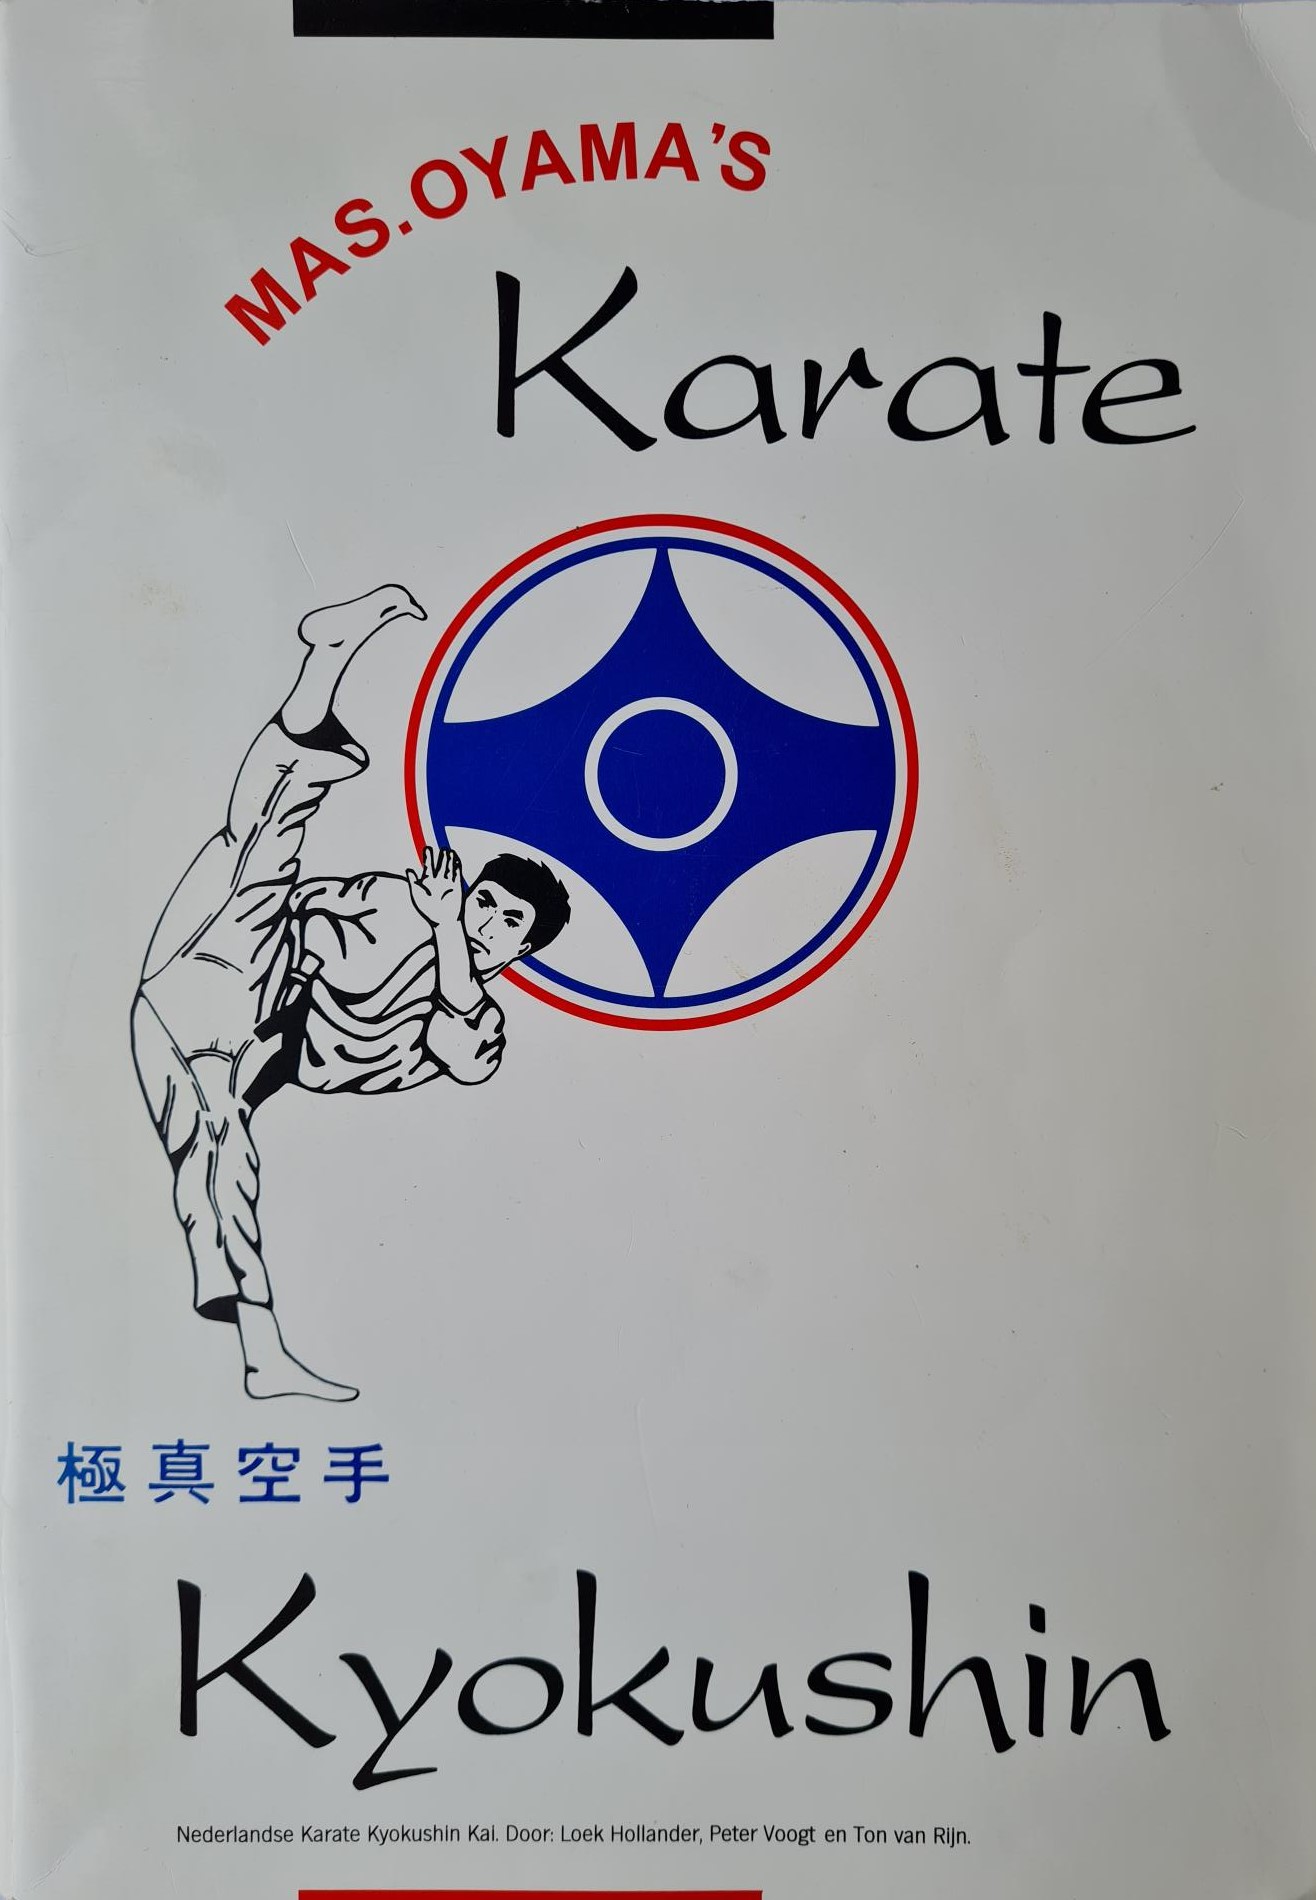 Mas Oyamas Karate Kyokushin - Loek Hollander - Peter Voogt - Ton van Rijn